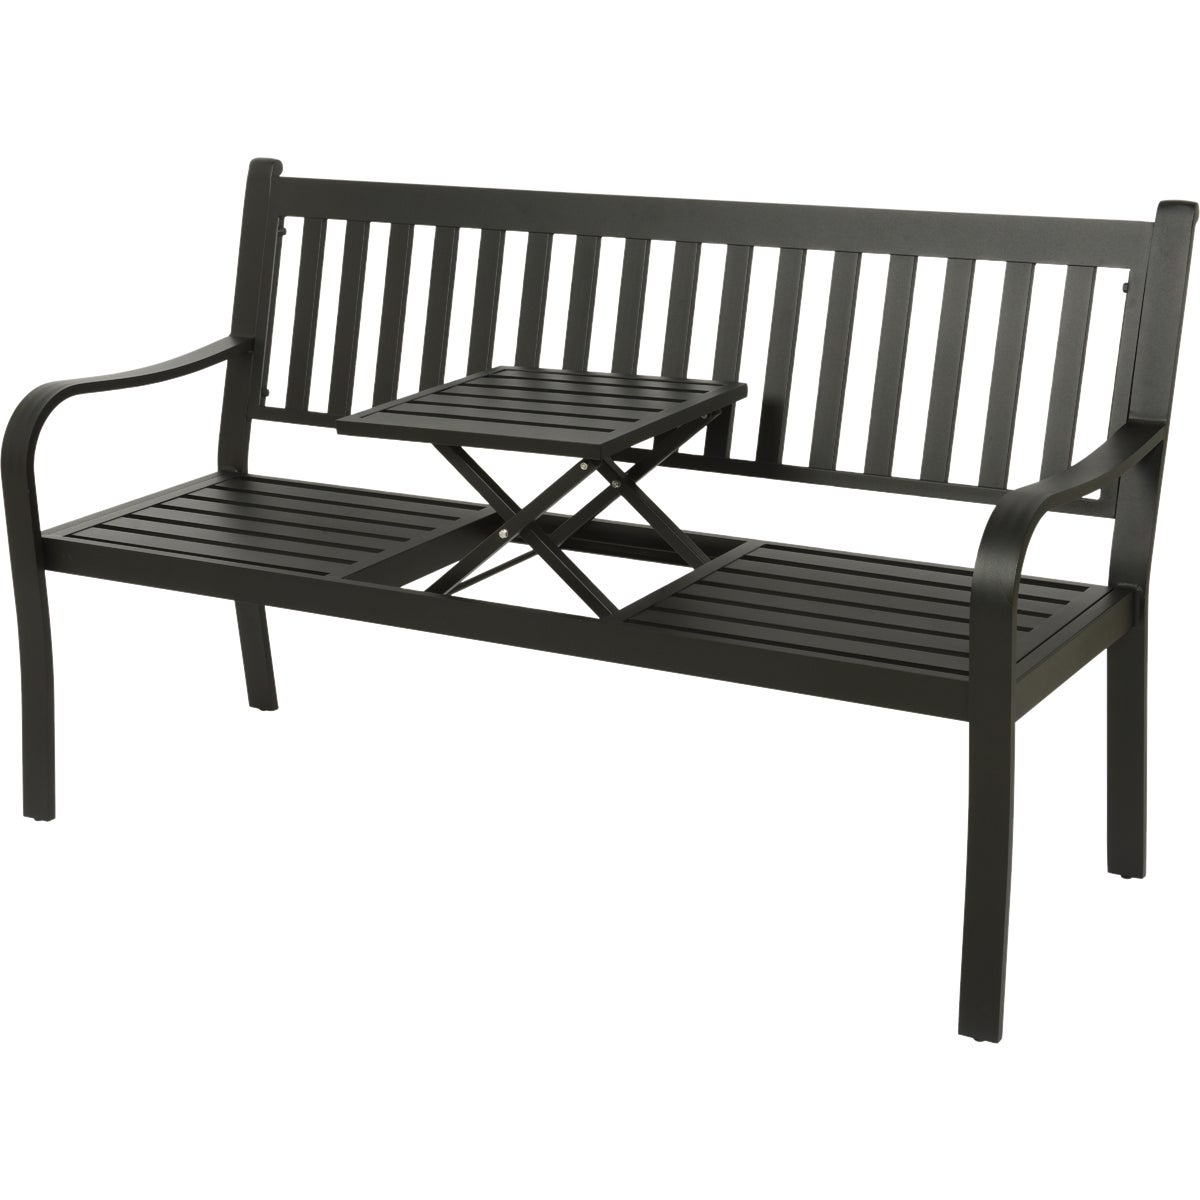 Decoris Garden Furniture Nottingham 60 In. L. Black Aluminum Bench with Pop Up Side Table